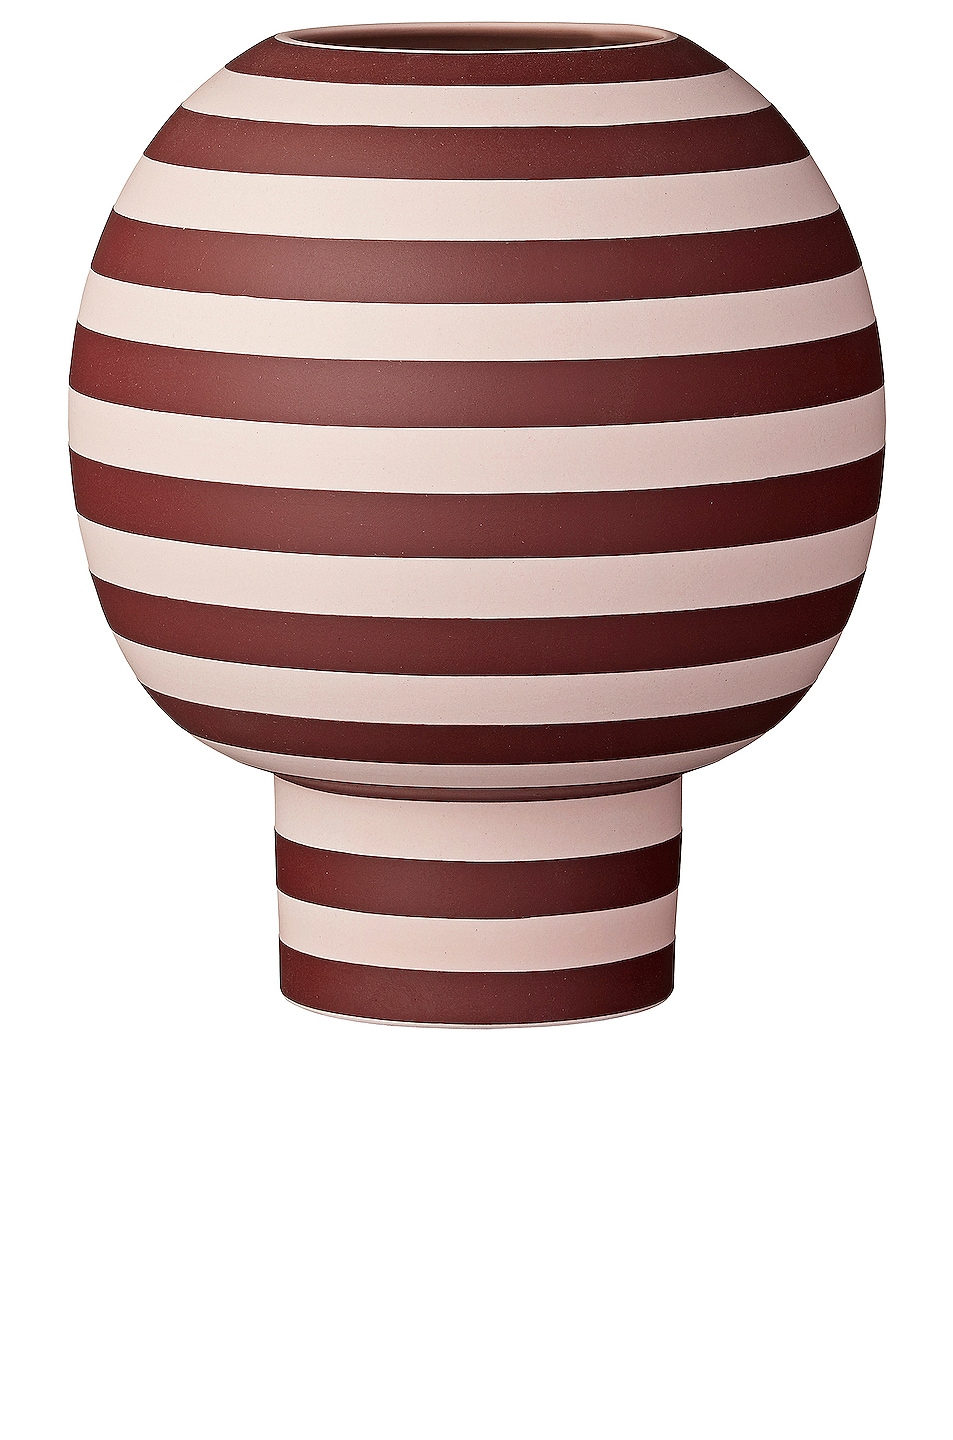 Image 1 of AYTM Varia Round Vase in Rose & Bordeaux